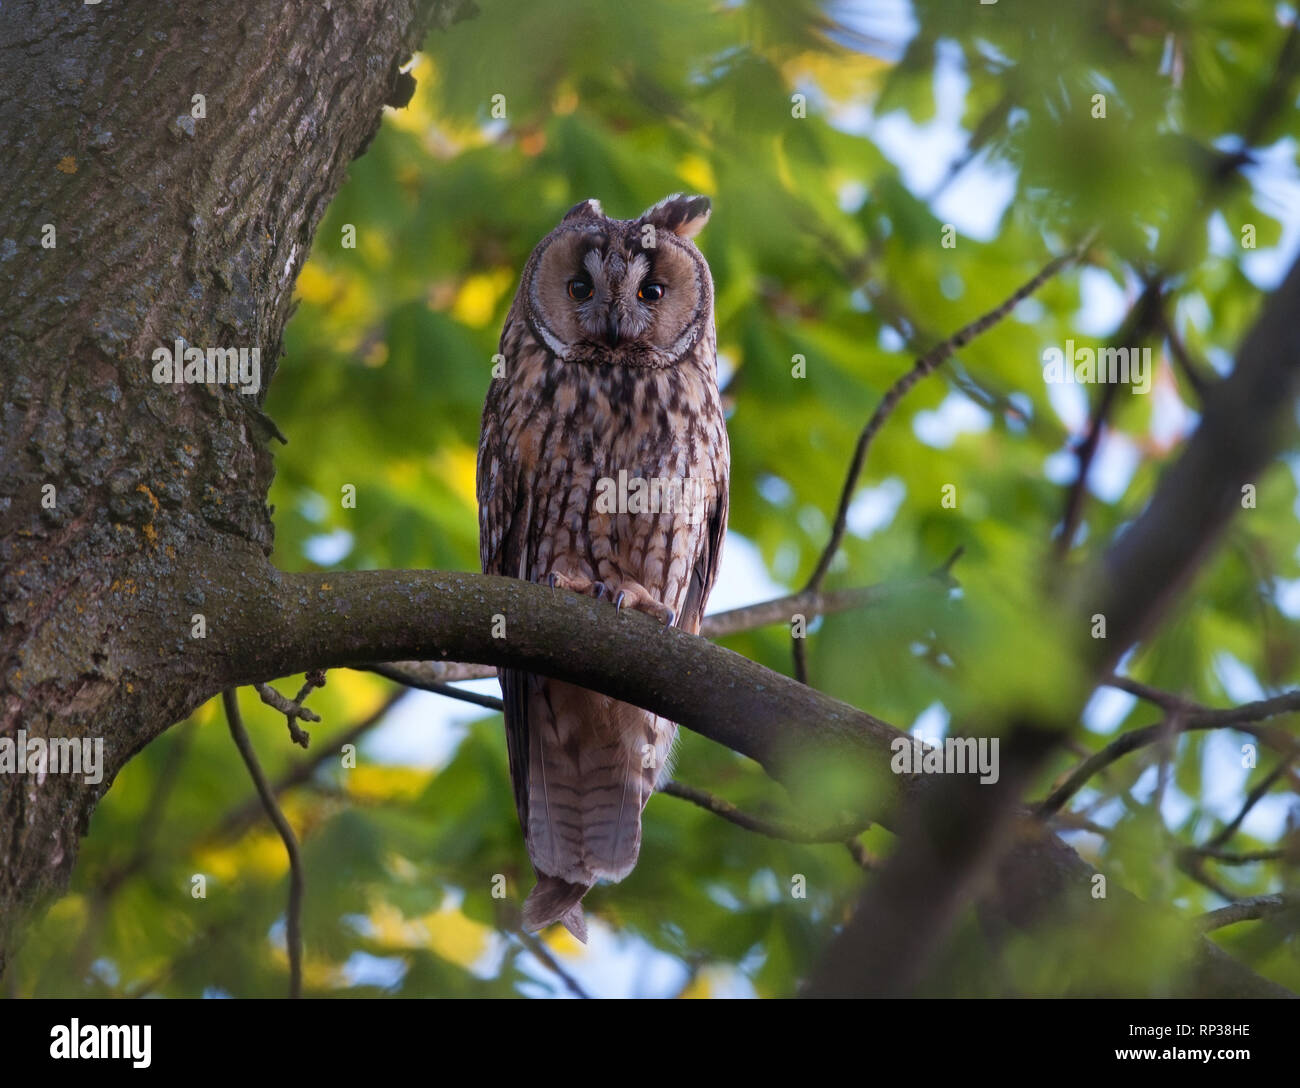 Long-eared owl hiding herself in green foliage Stock Photo